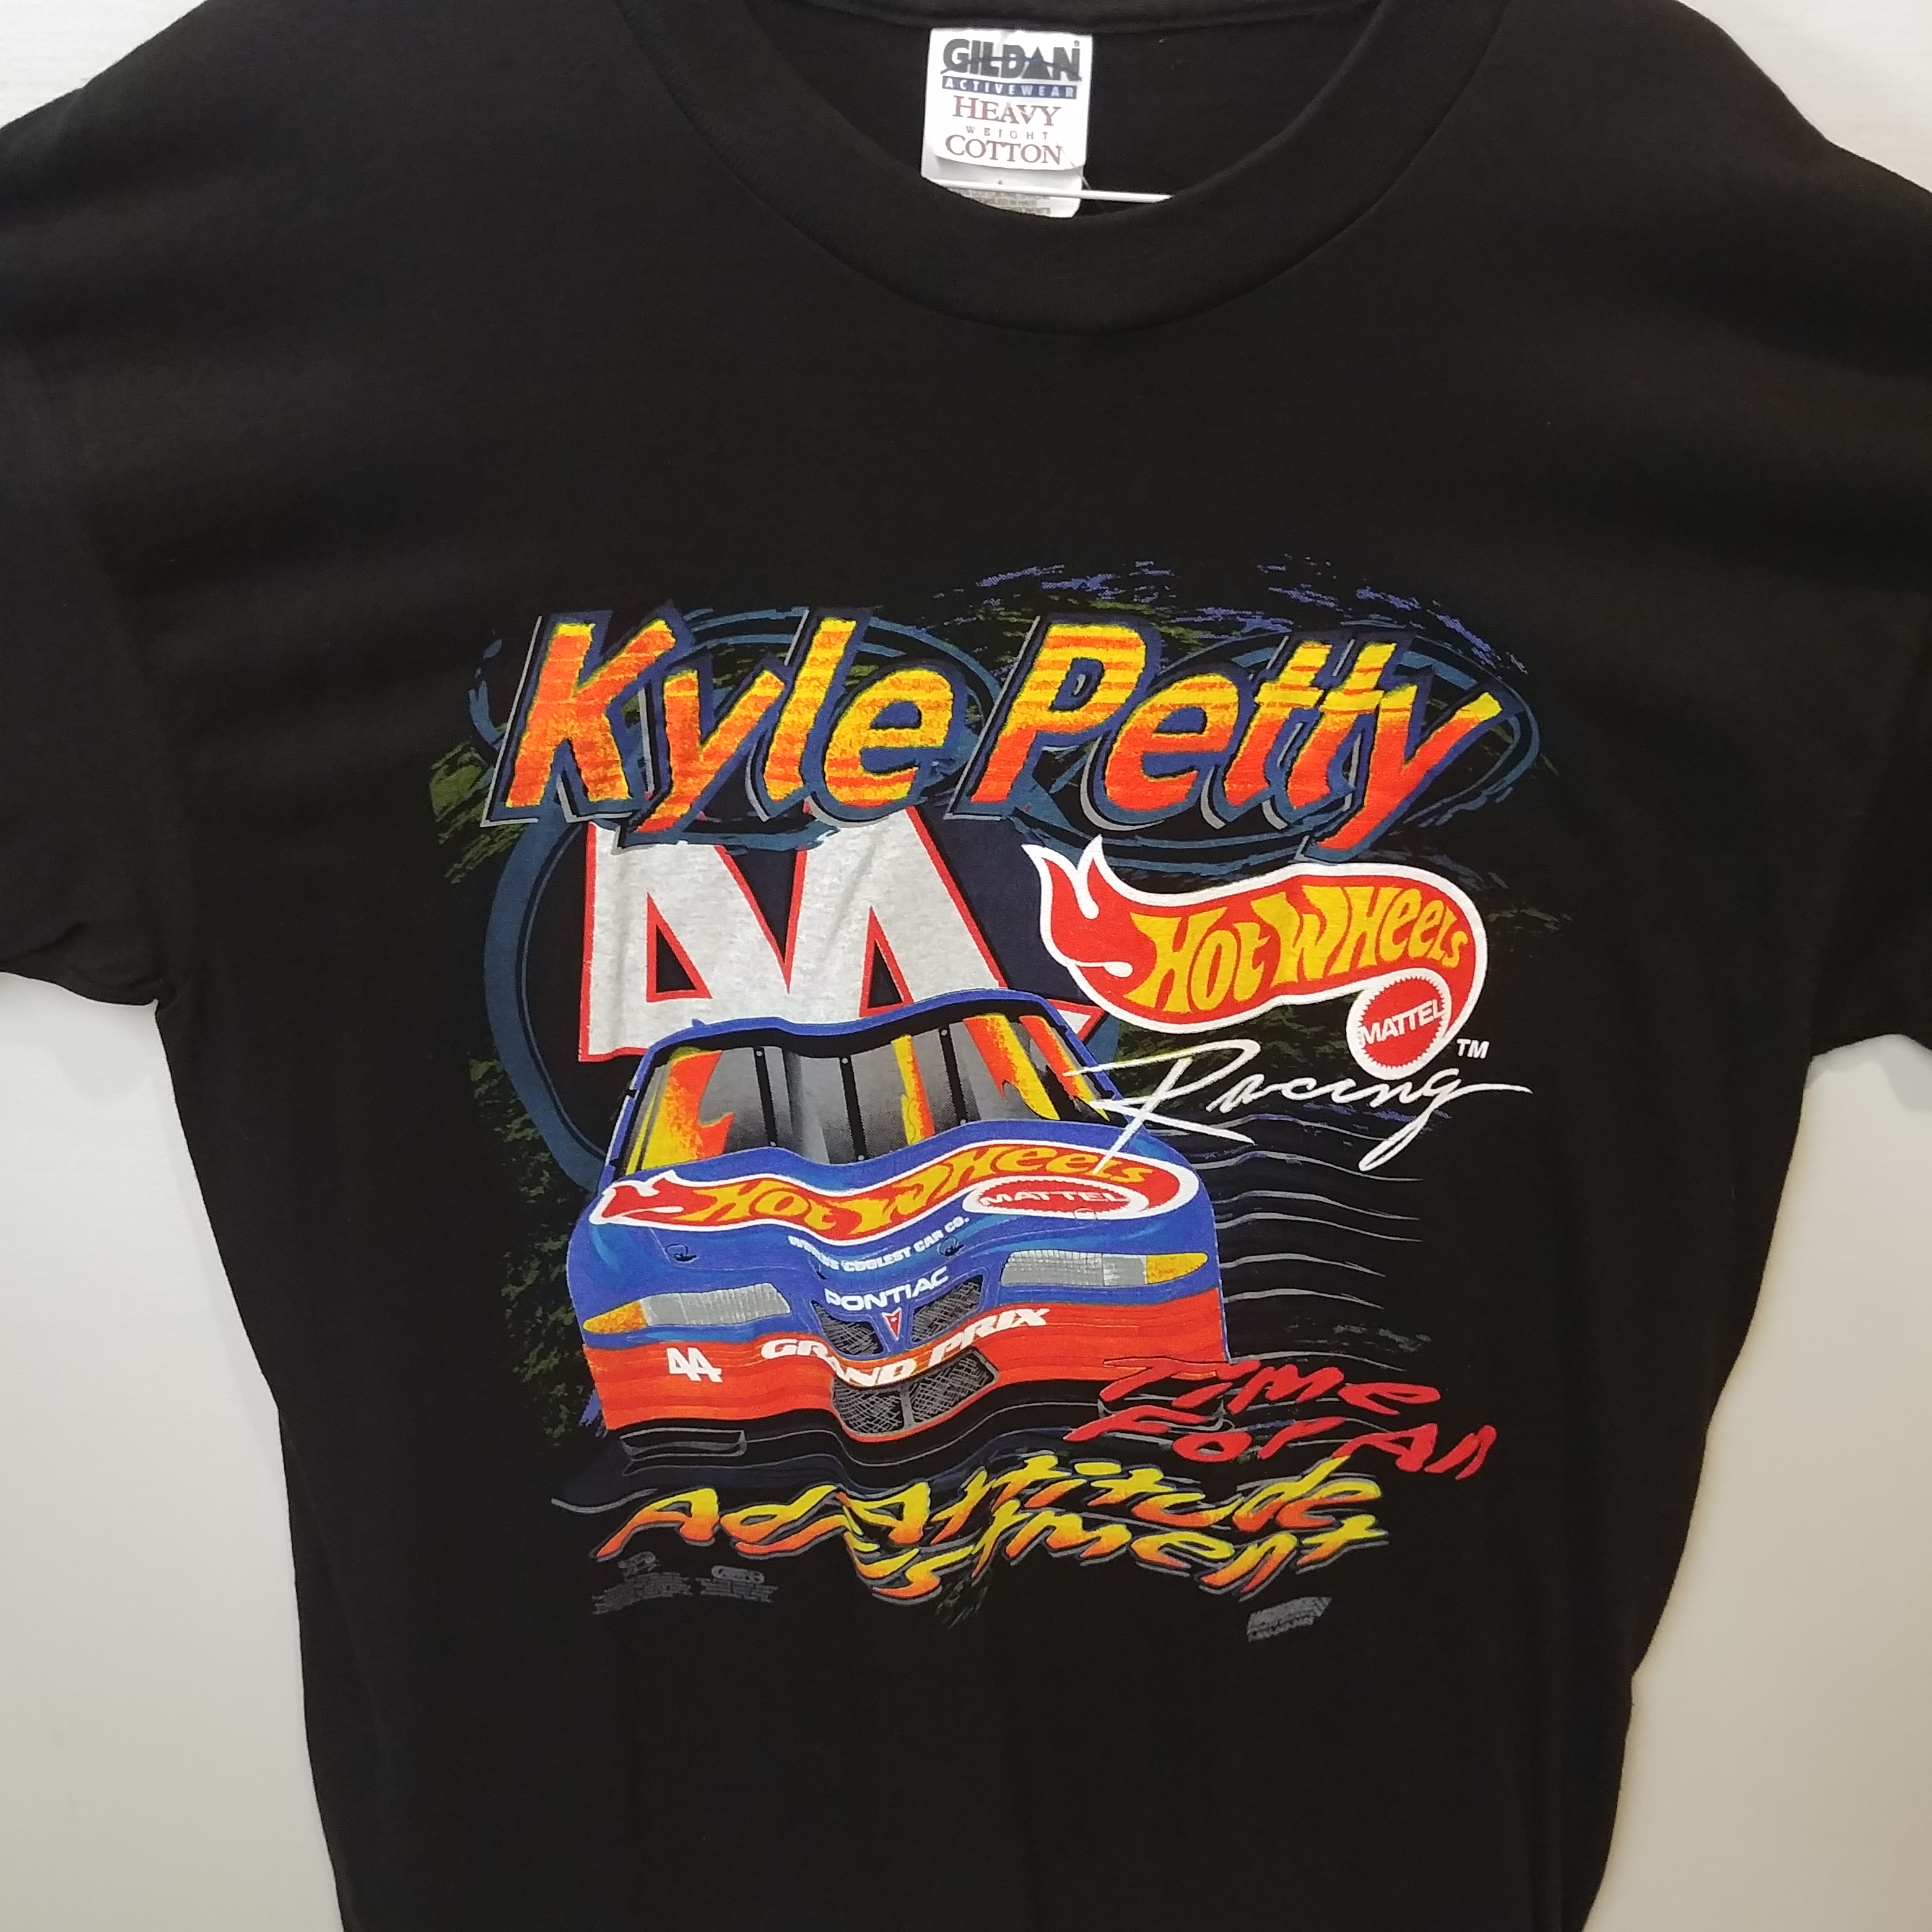 1997 Kyle Petty Hot Wheels "Attitude Adjustment" tee